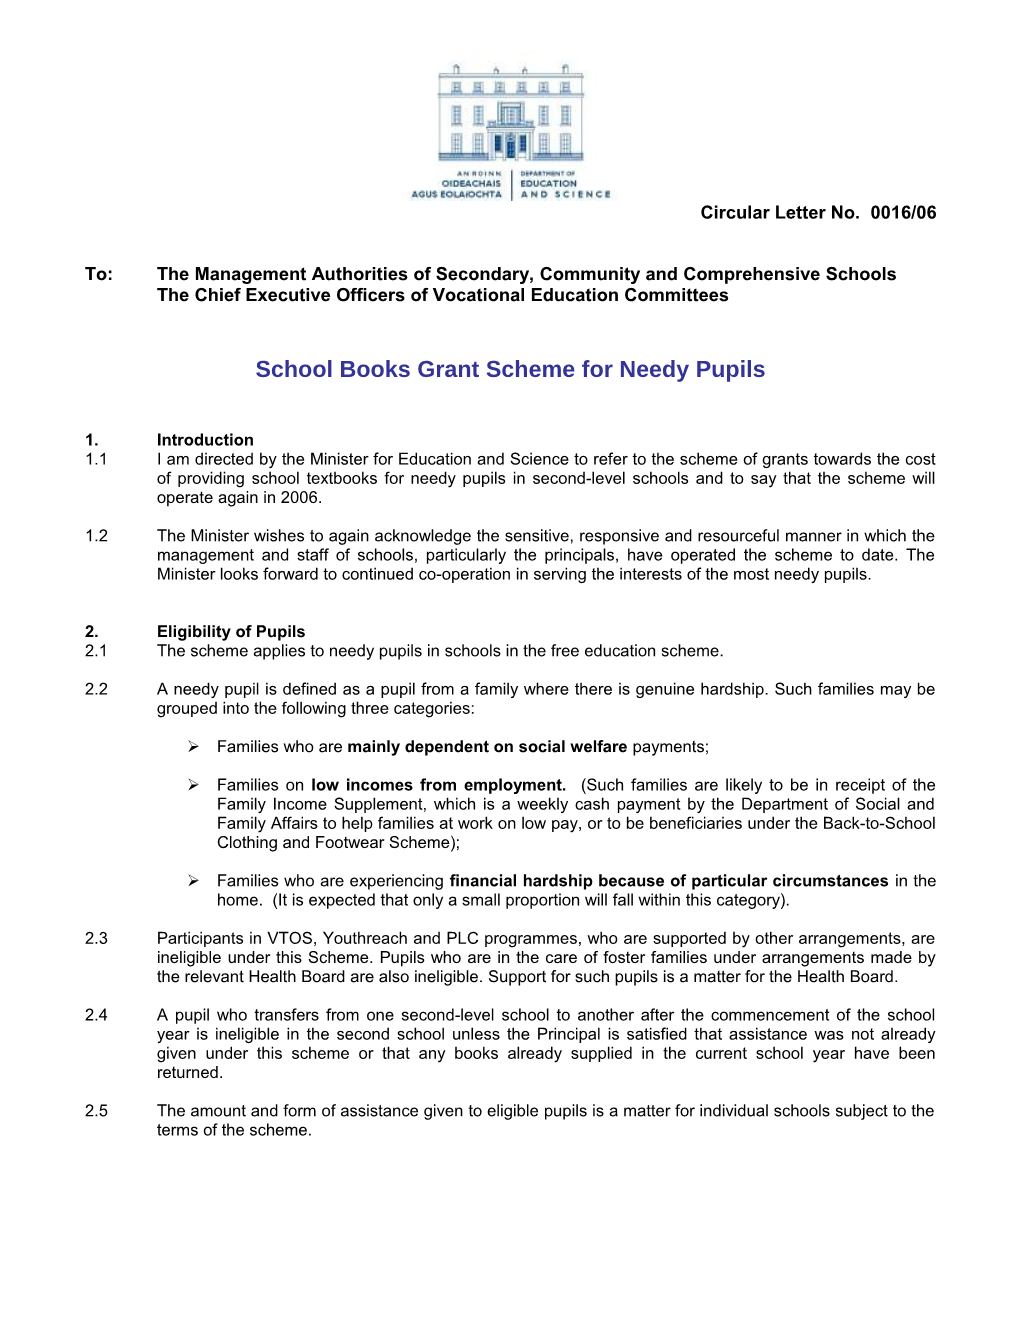 Circular 0016/2006 - School Books Grant Scheme for Needy Pupils (File Format Word 70KB)